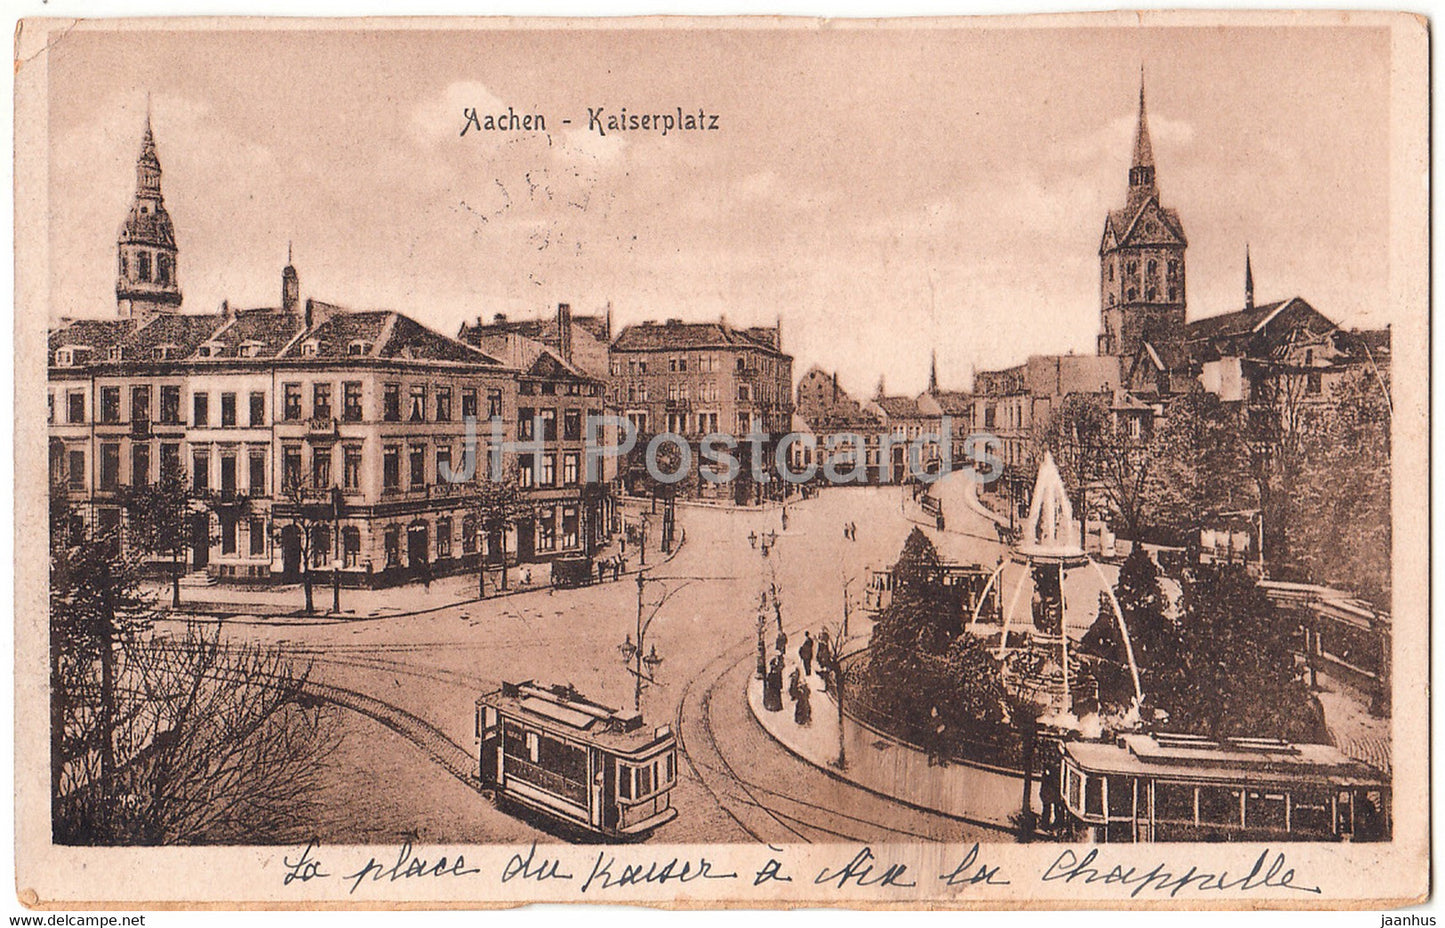 Aachen - Kaiserplatz - Aix La Chapelle - tram - 54996 - old postcard - Germany - used - JH Postcards